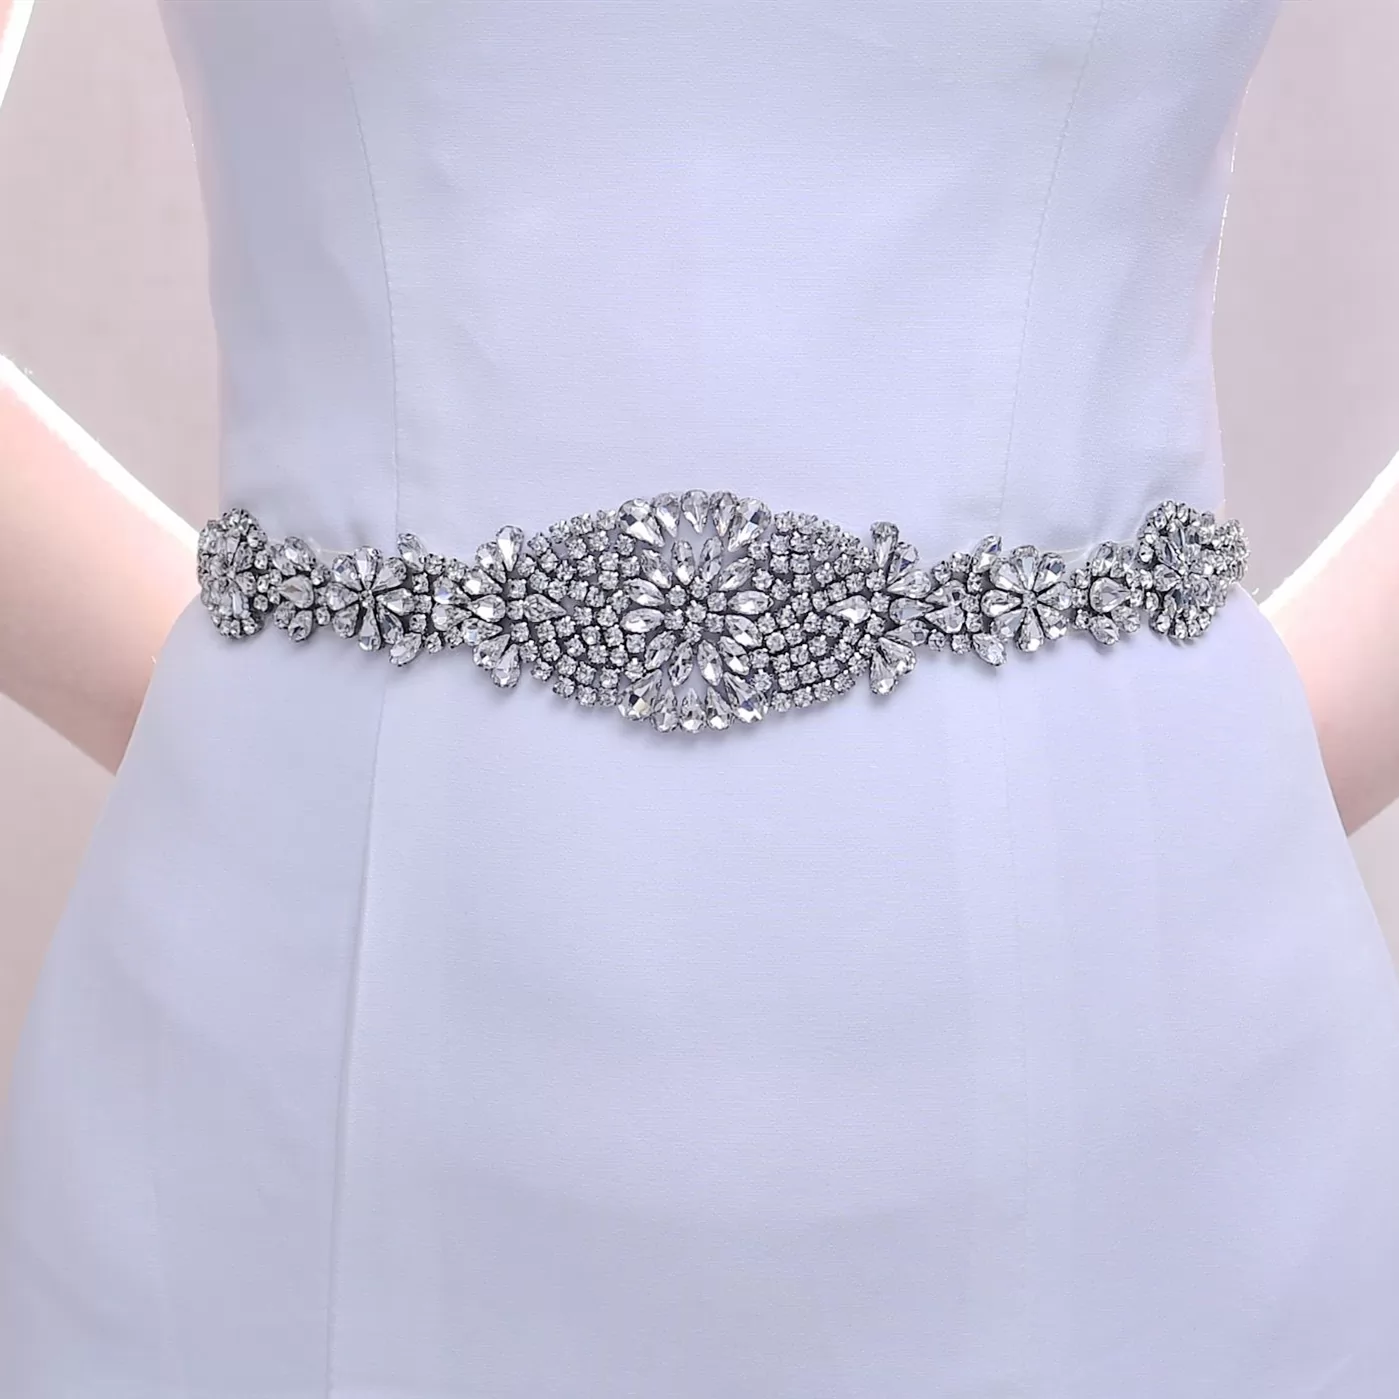 Luxury Rhinestone Crystal Sash Wedding Belt